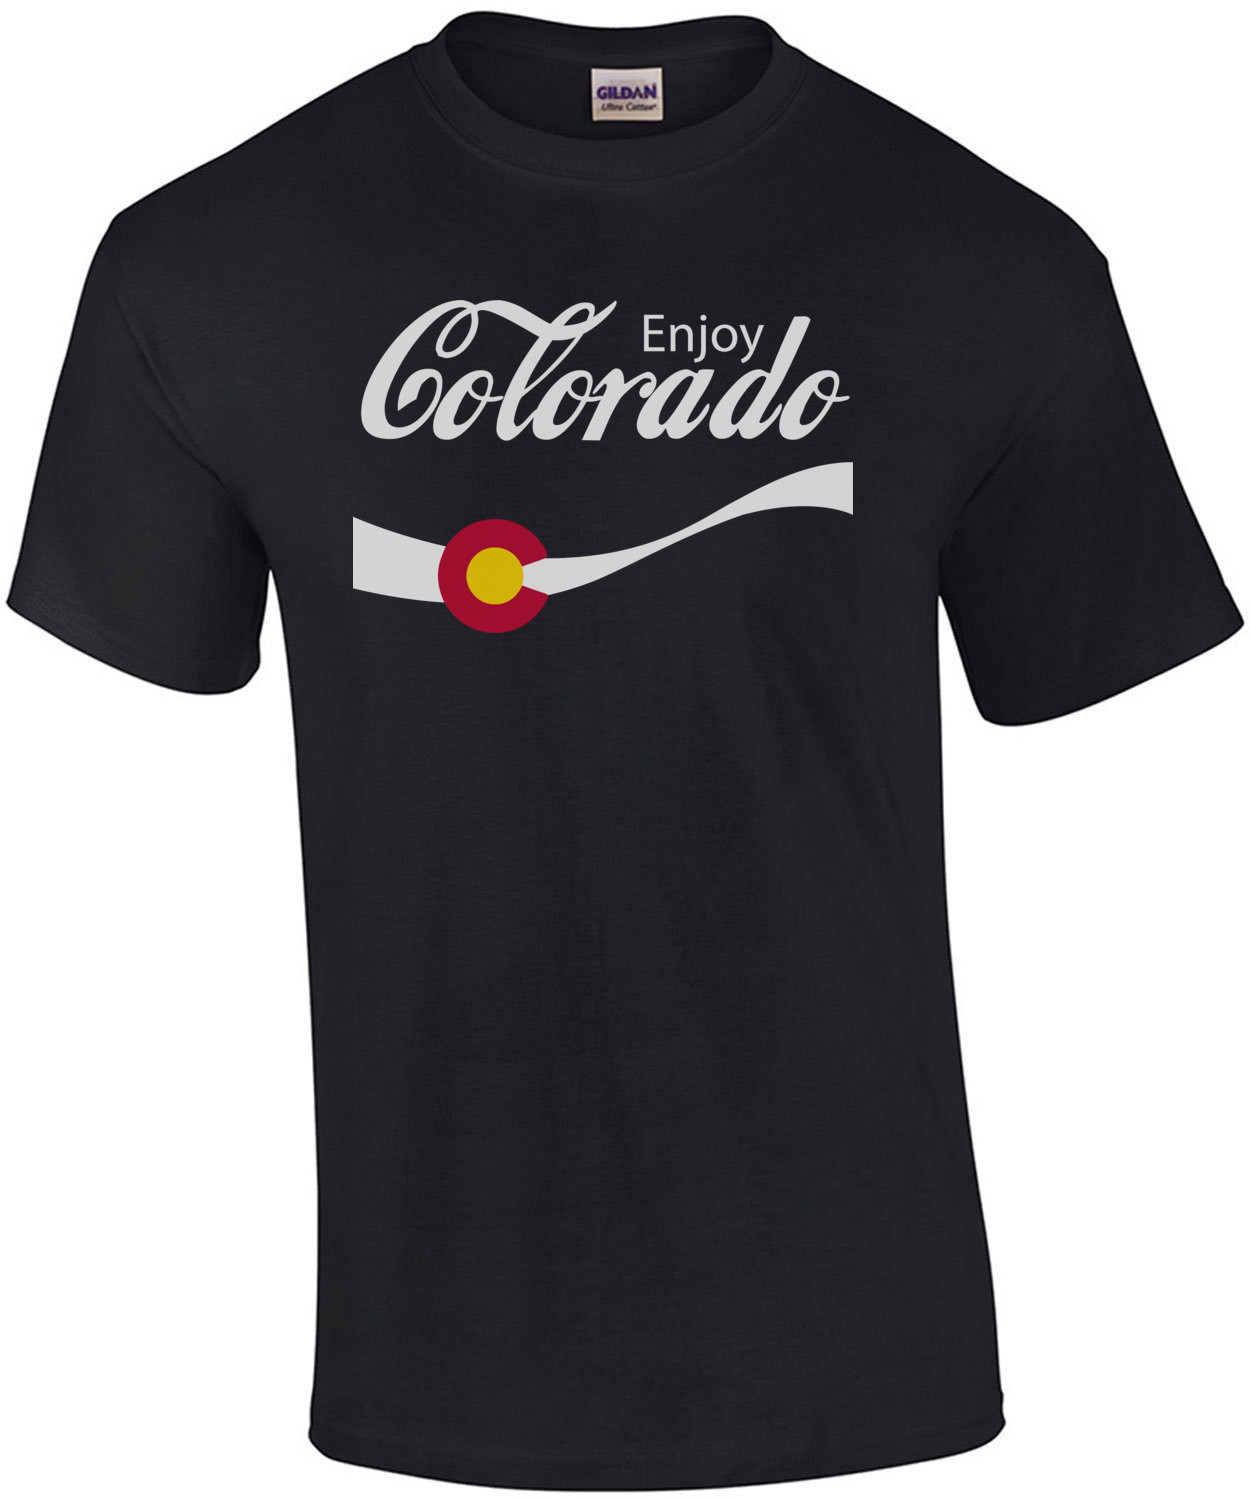 Enjoy Colorado - Colorado T-Shirt